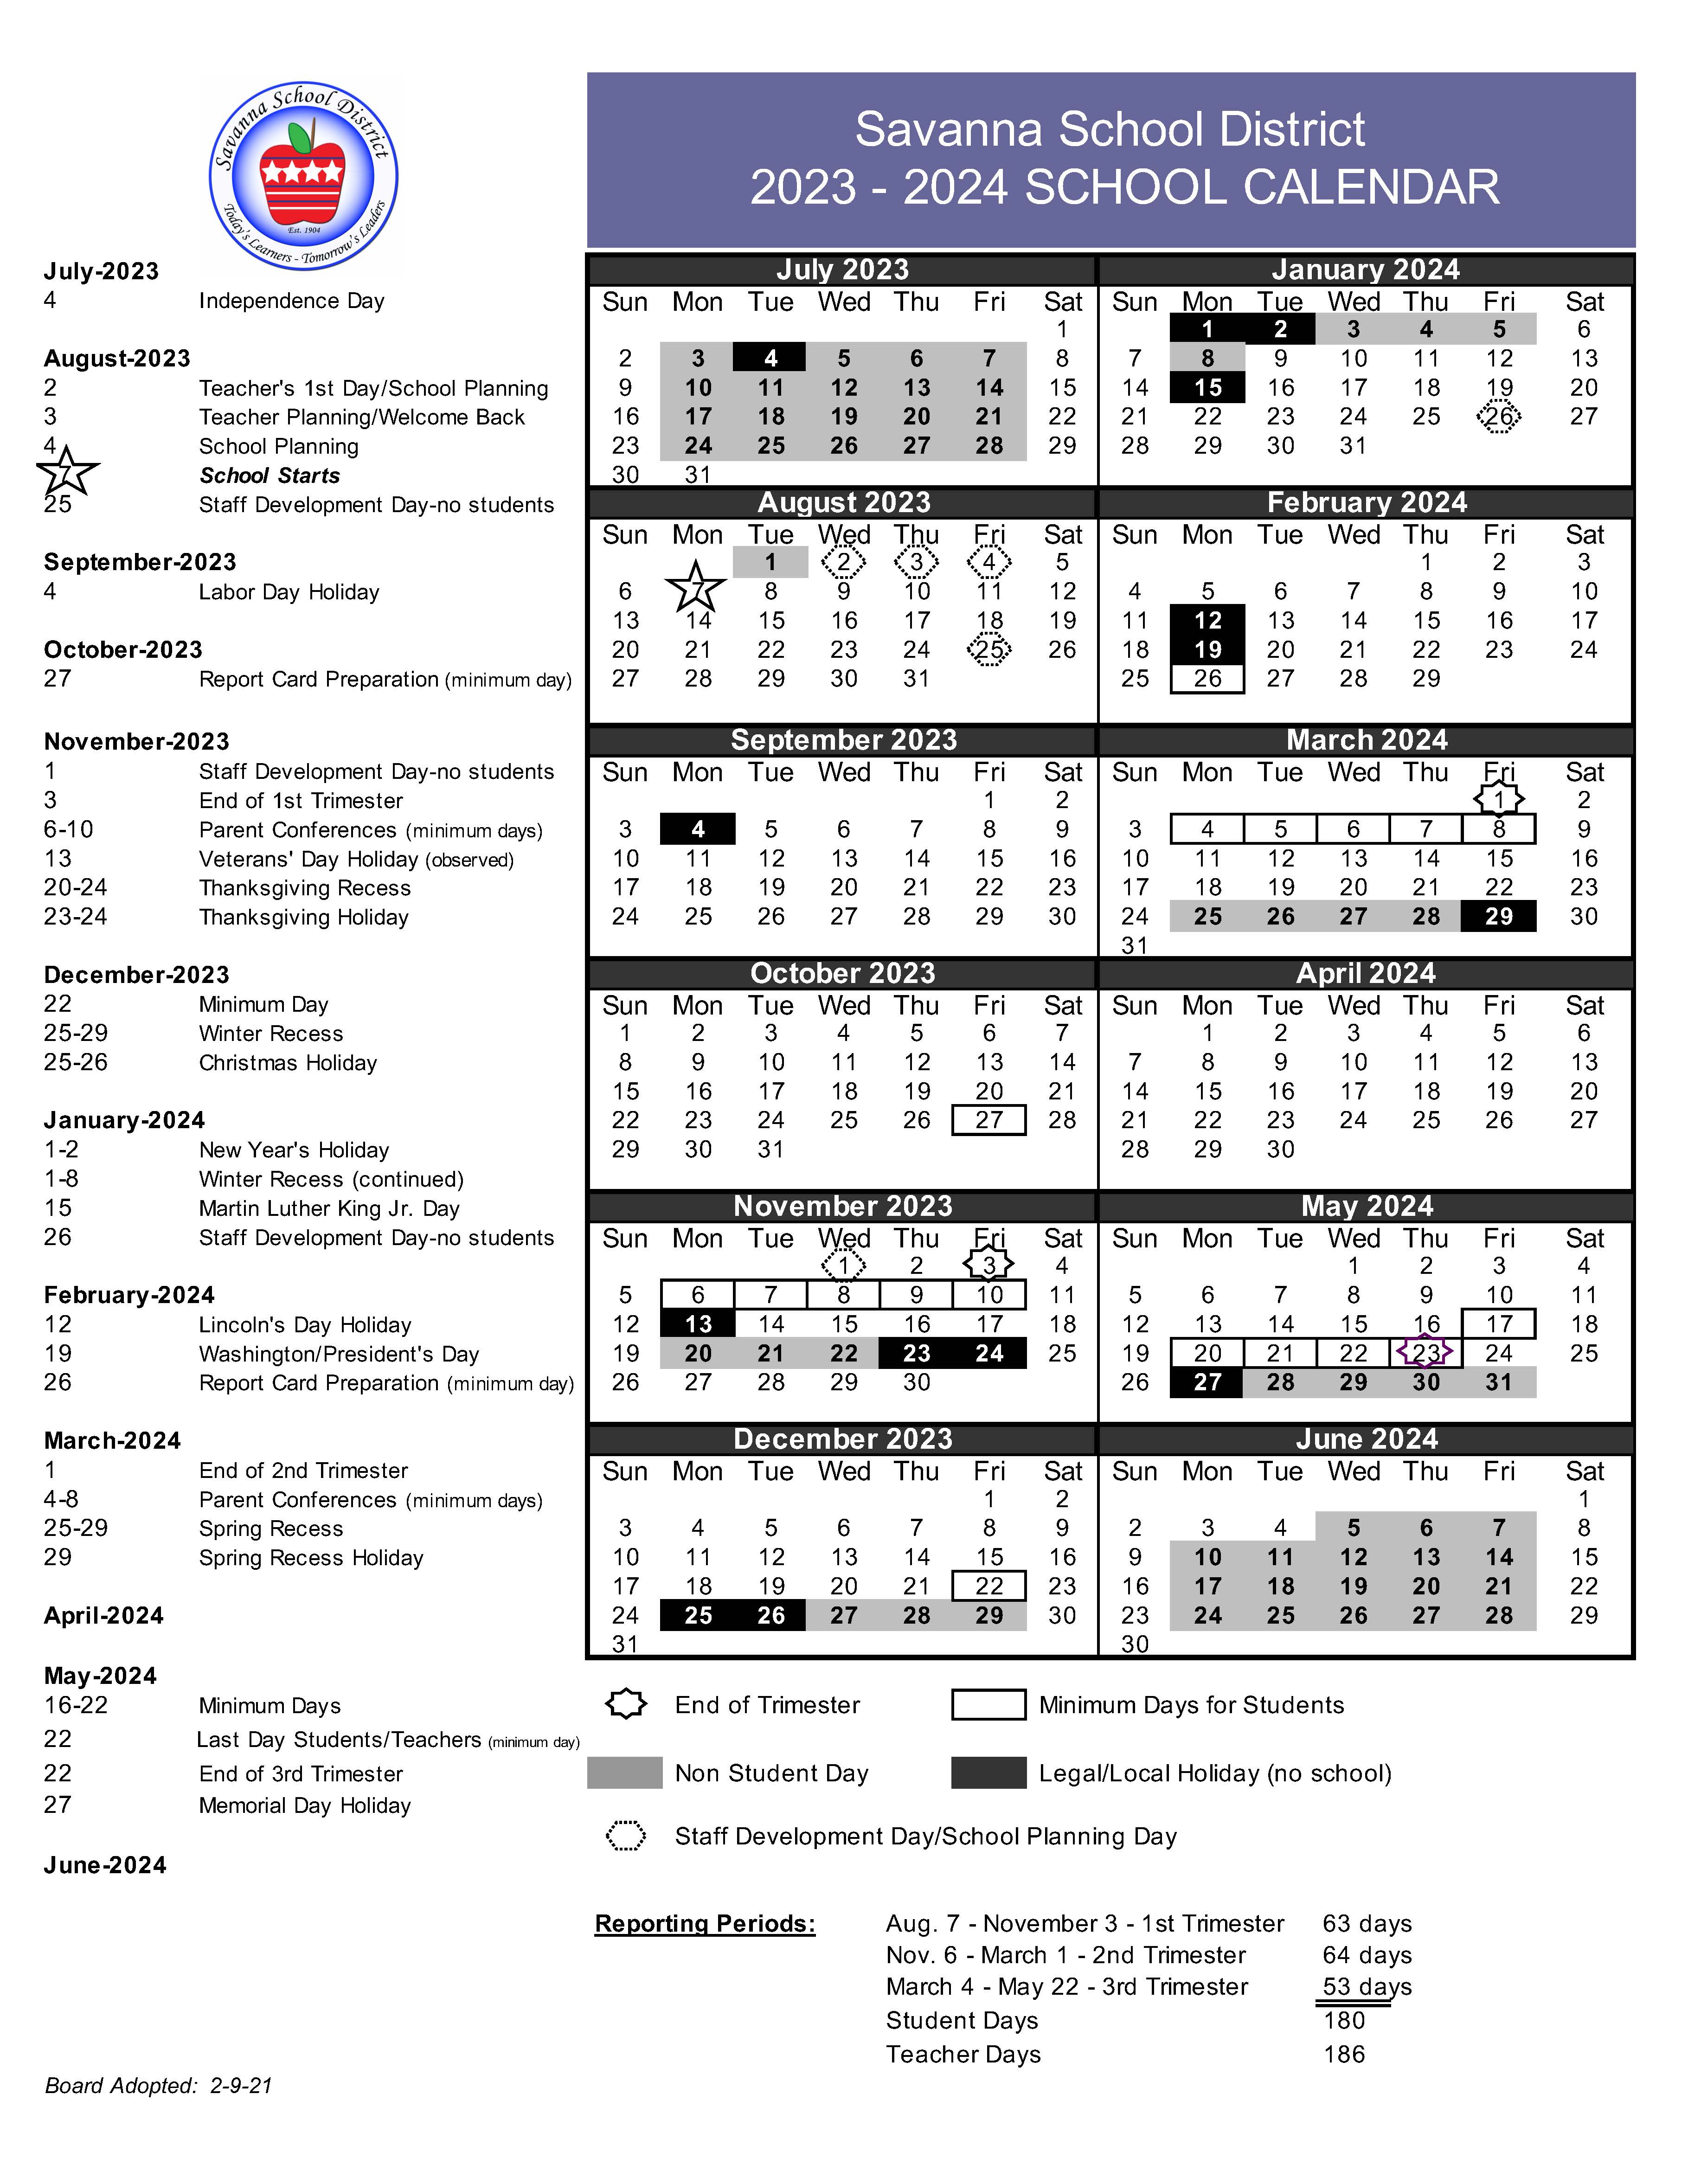 Savanna School District Academic Calendar